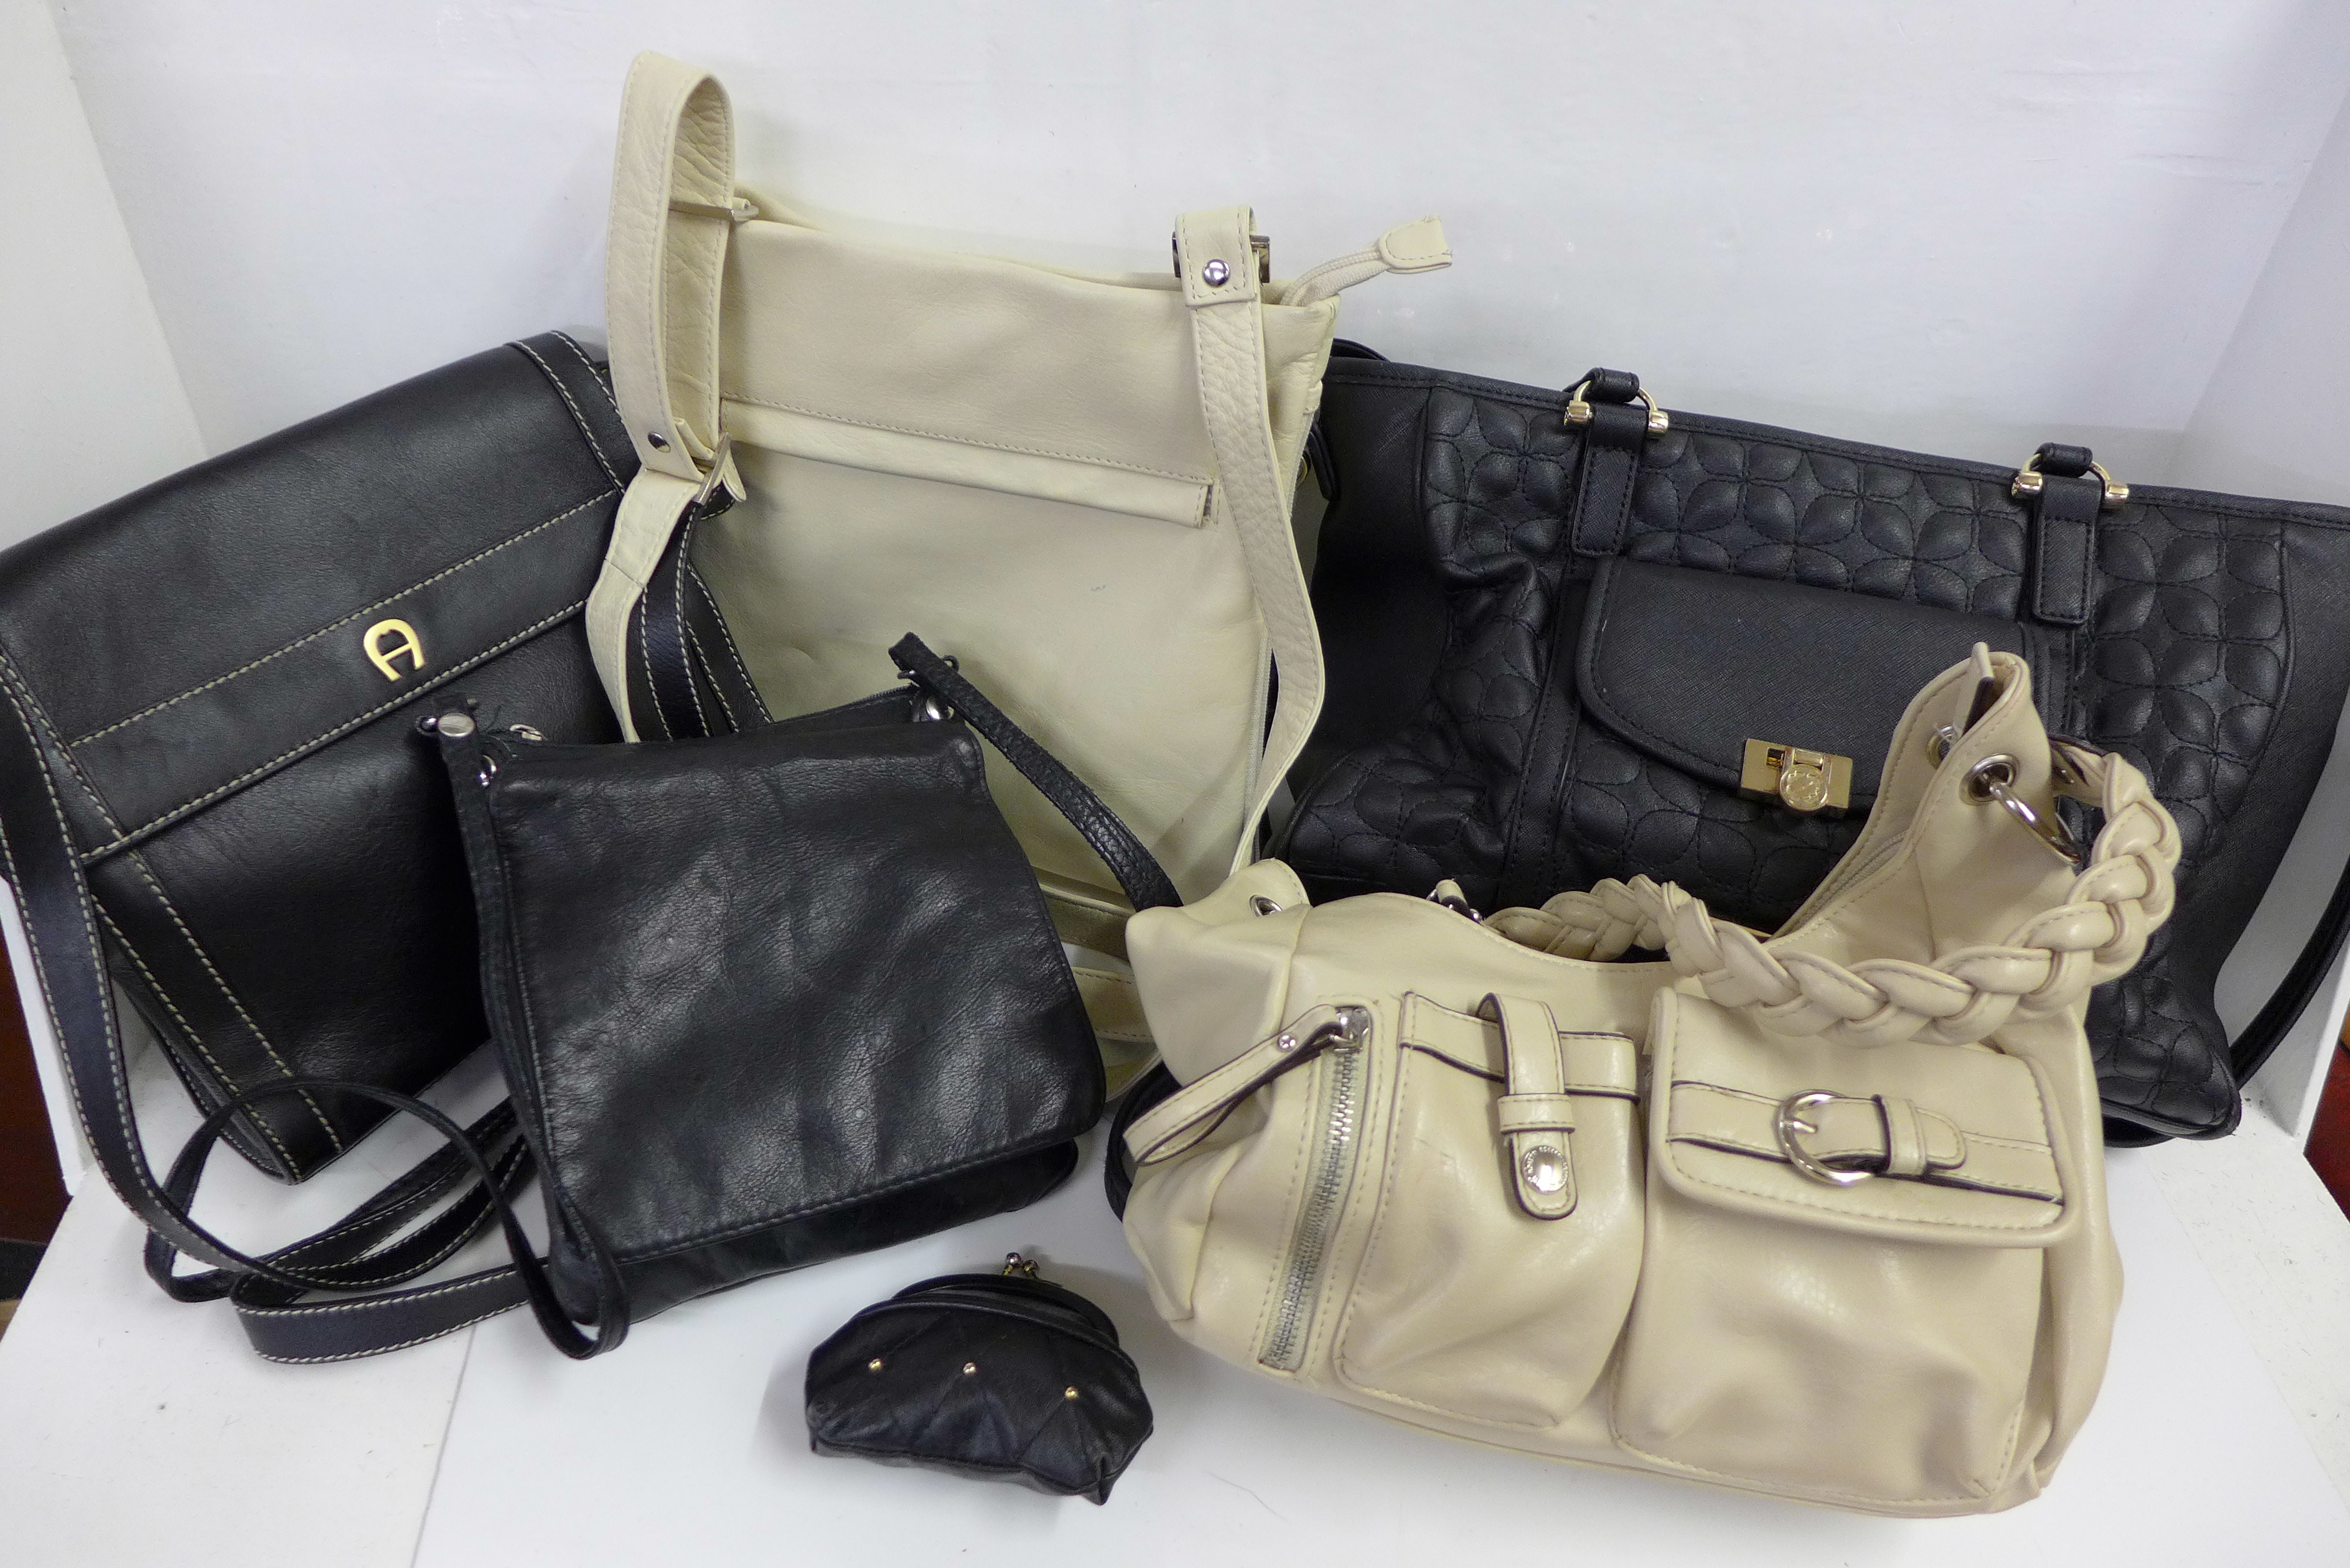 Five lady's handbags including Rowallan, Aigner, Paris Hilton, Rosetti